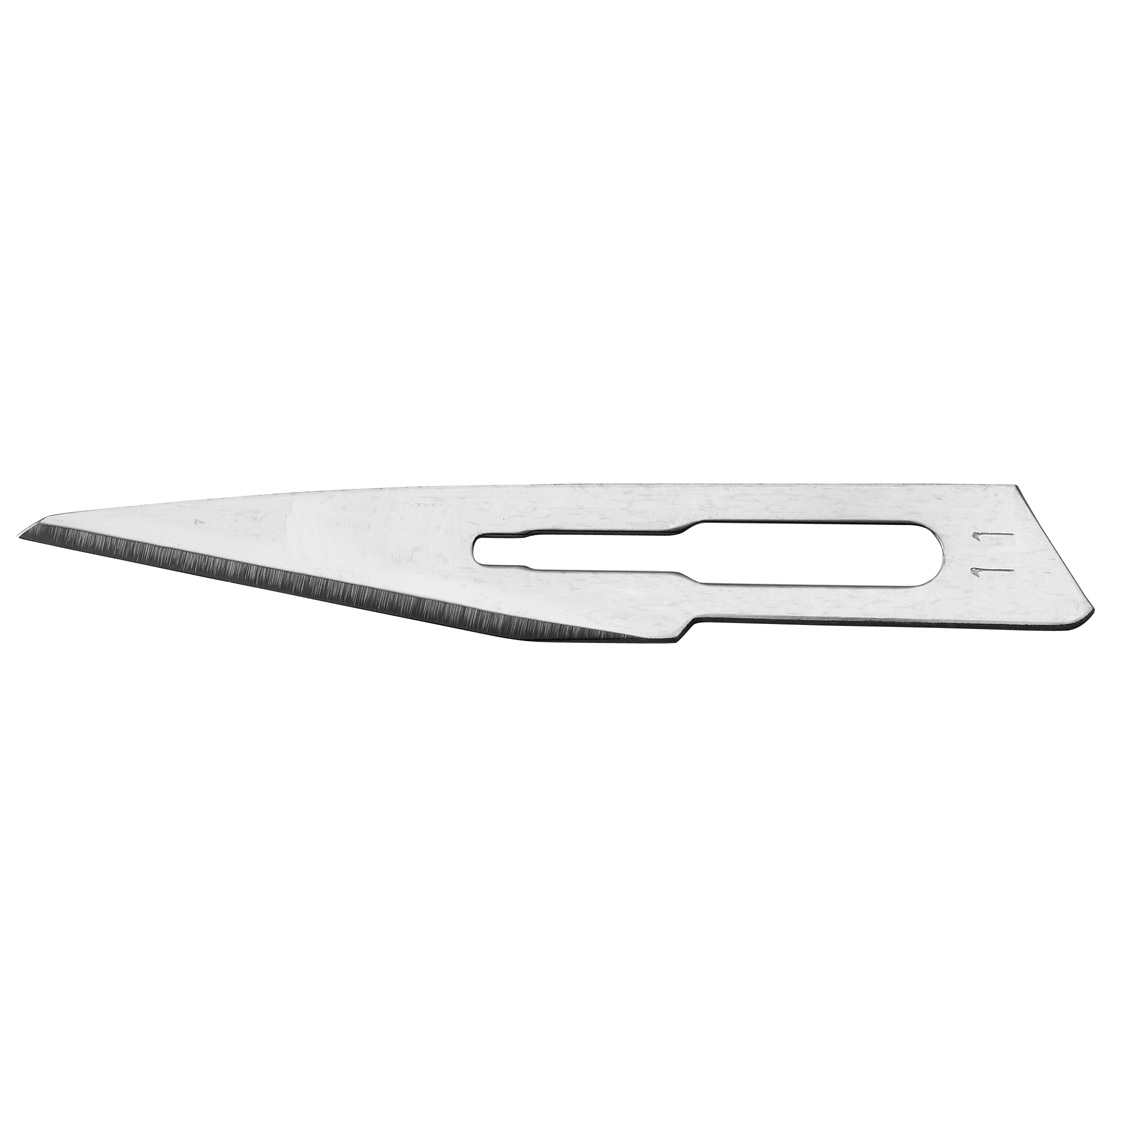 Paramount sterile single-use professional scalpel blades size 11 100 pcs